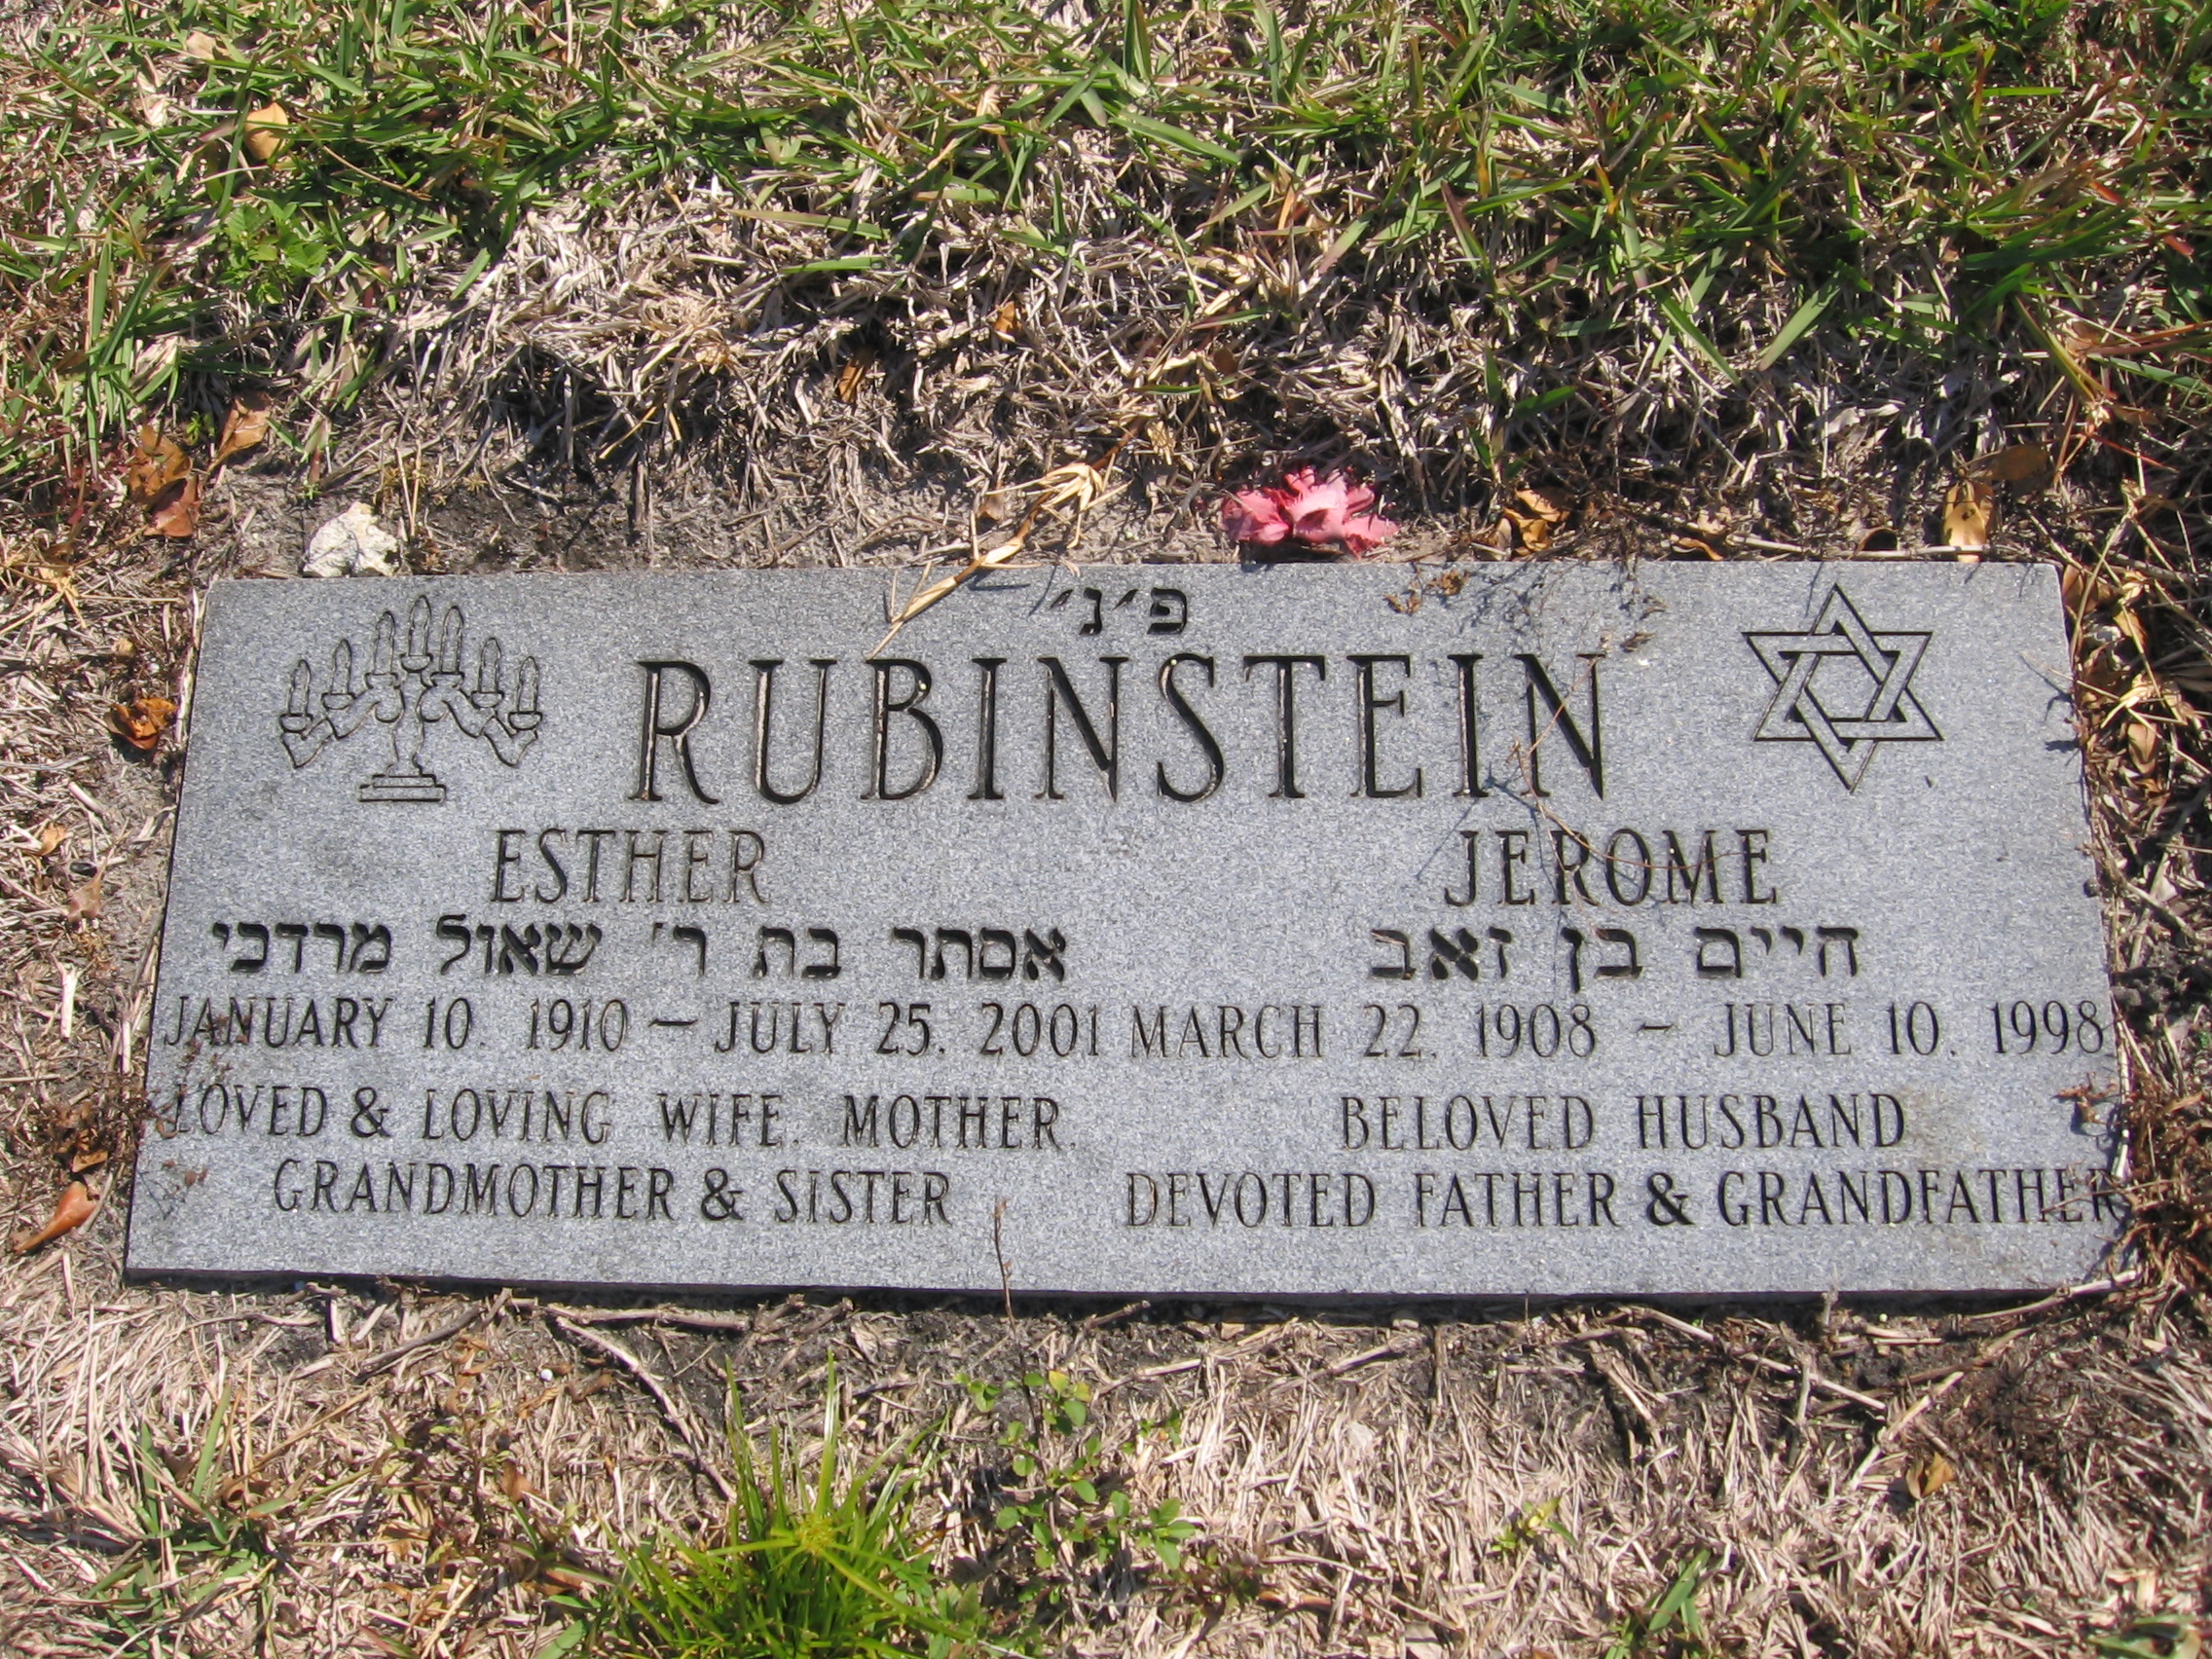 Jerome Rubinstein